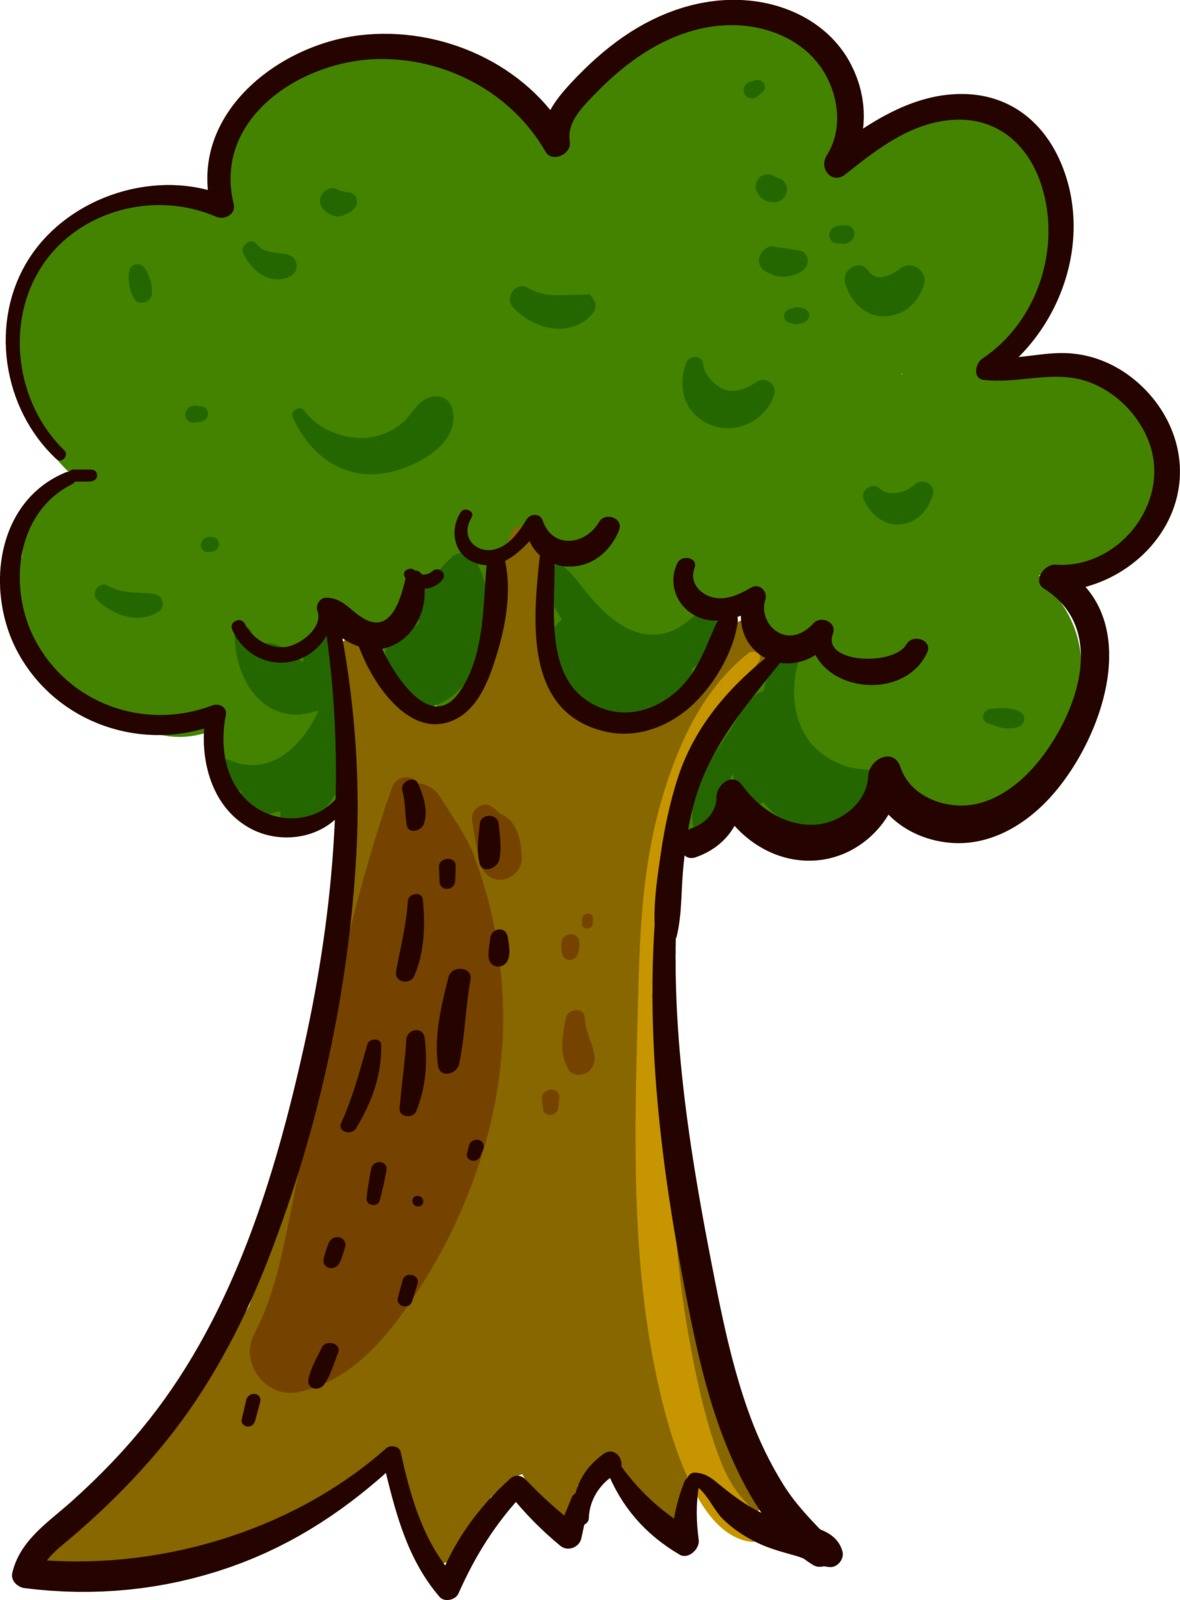 Oak tall tree, illustration, vector on white background